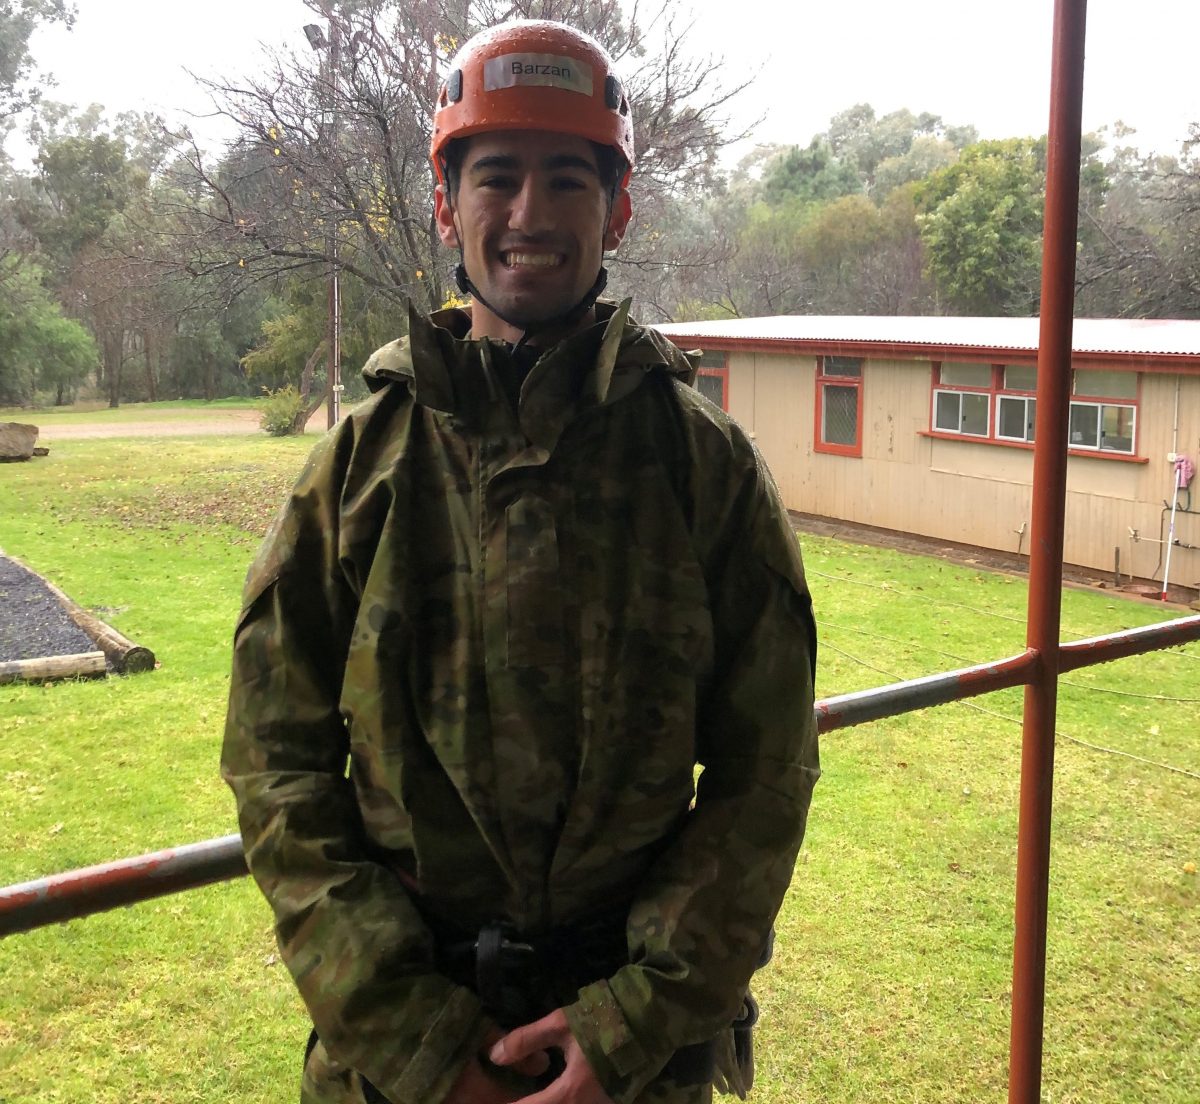 Mount Austin High School student Barzan Smoqi in camouflage gear and an orange helmet